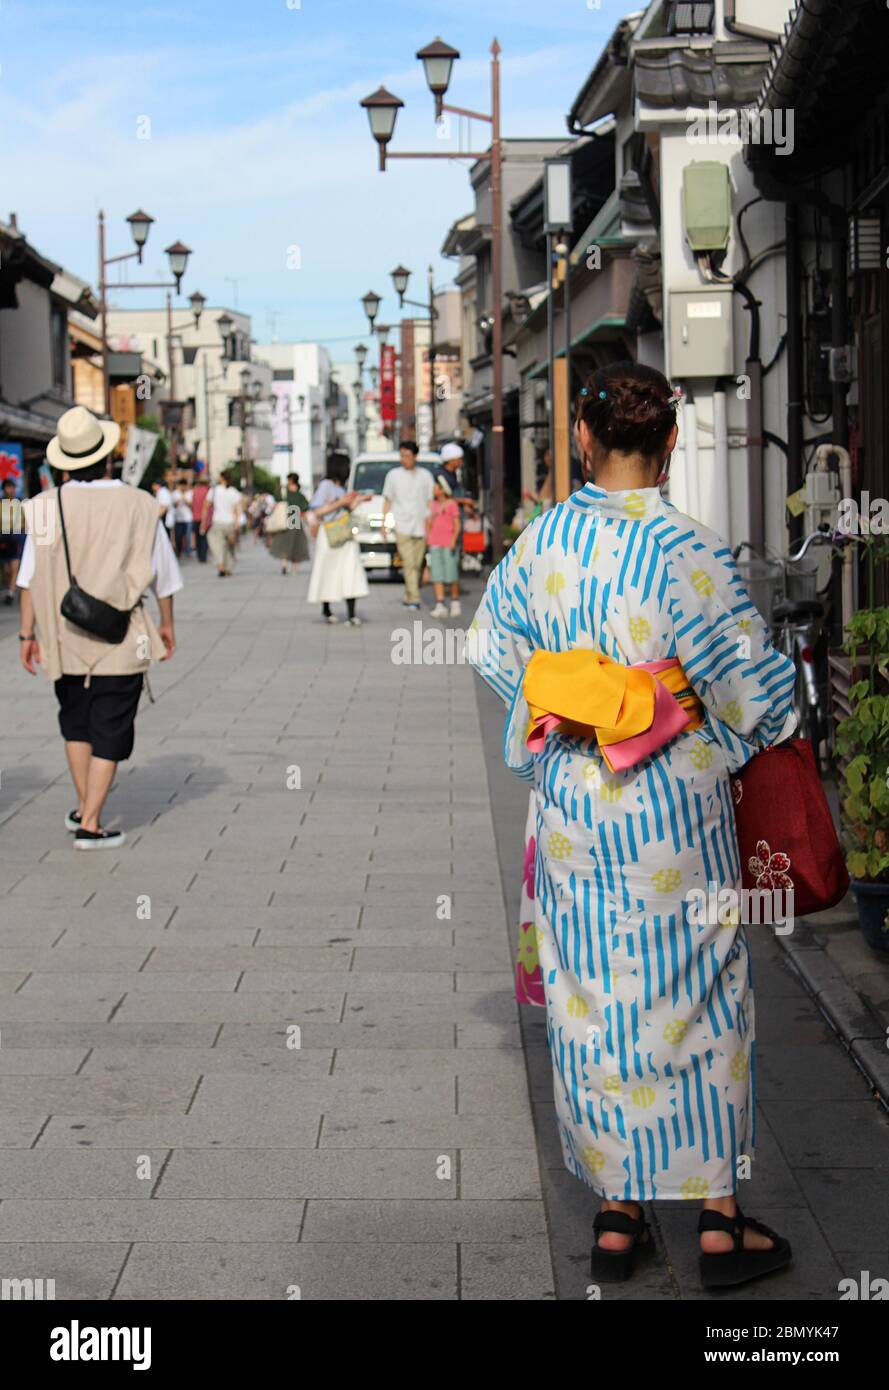 Frau in Yukata/Kimono, die durch die Straßen von Kawagoe, Tokio, geht Stockfoto